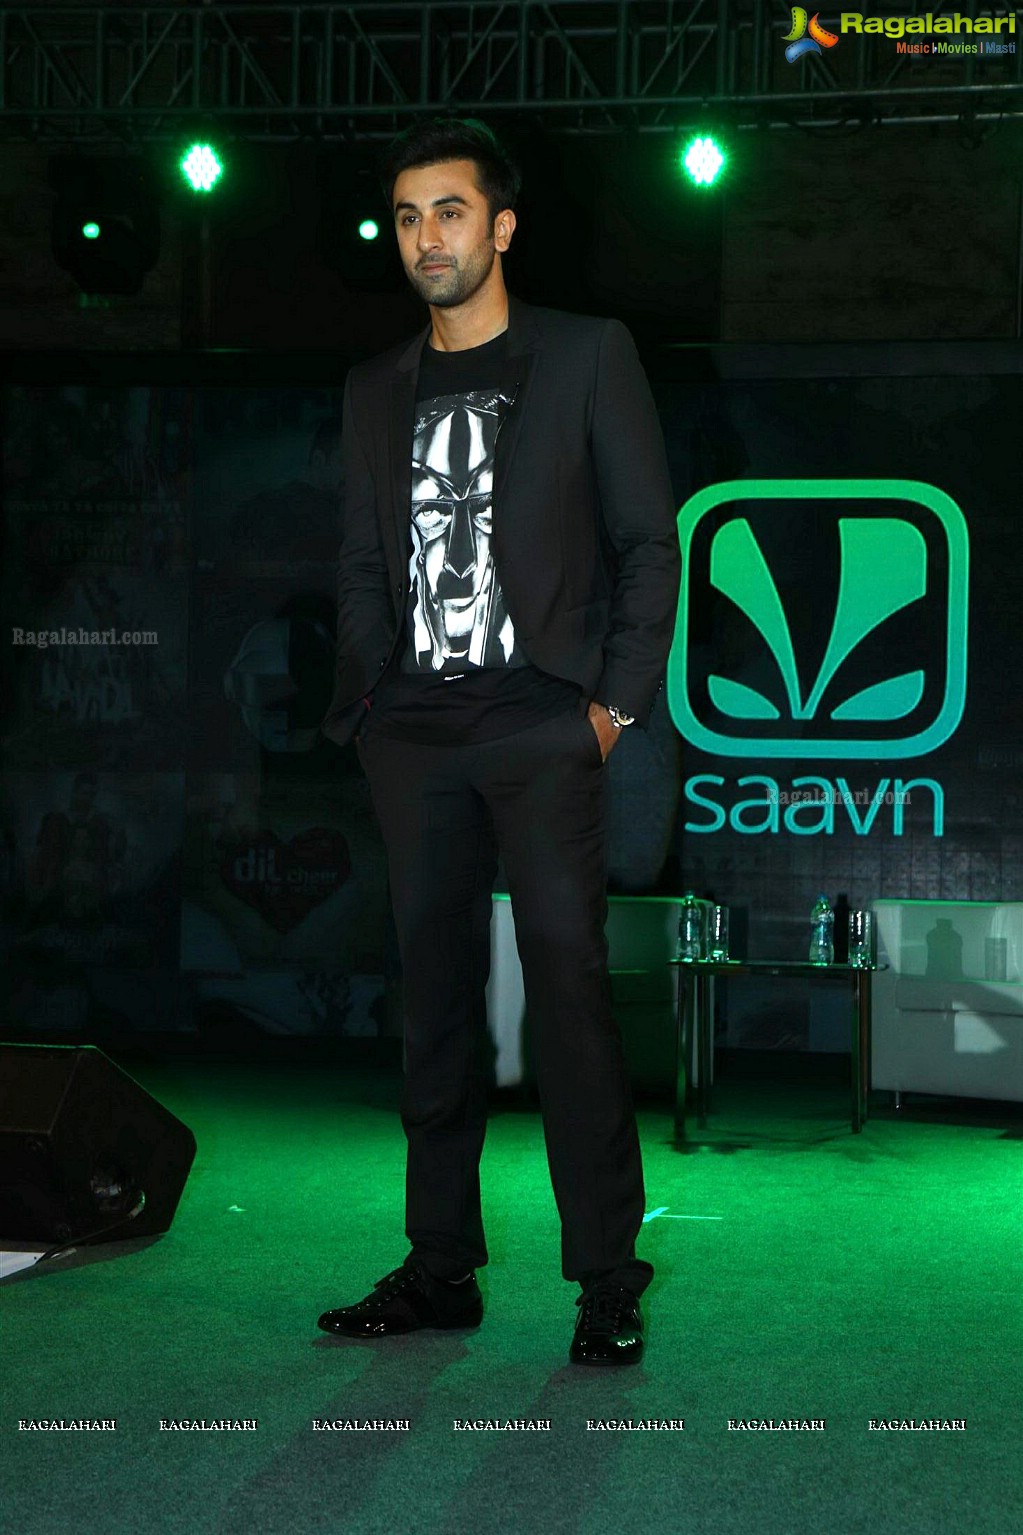 Ranbir Kapoor joins SAAVN as Creative Partner